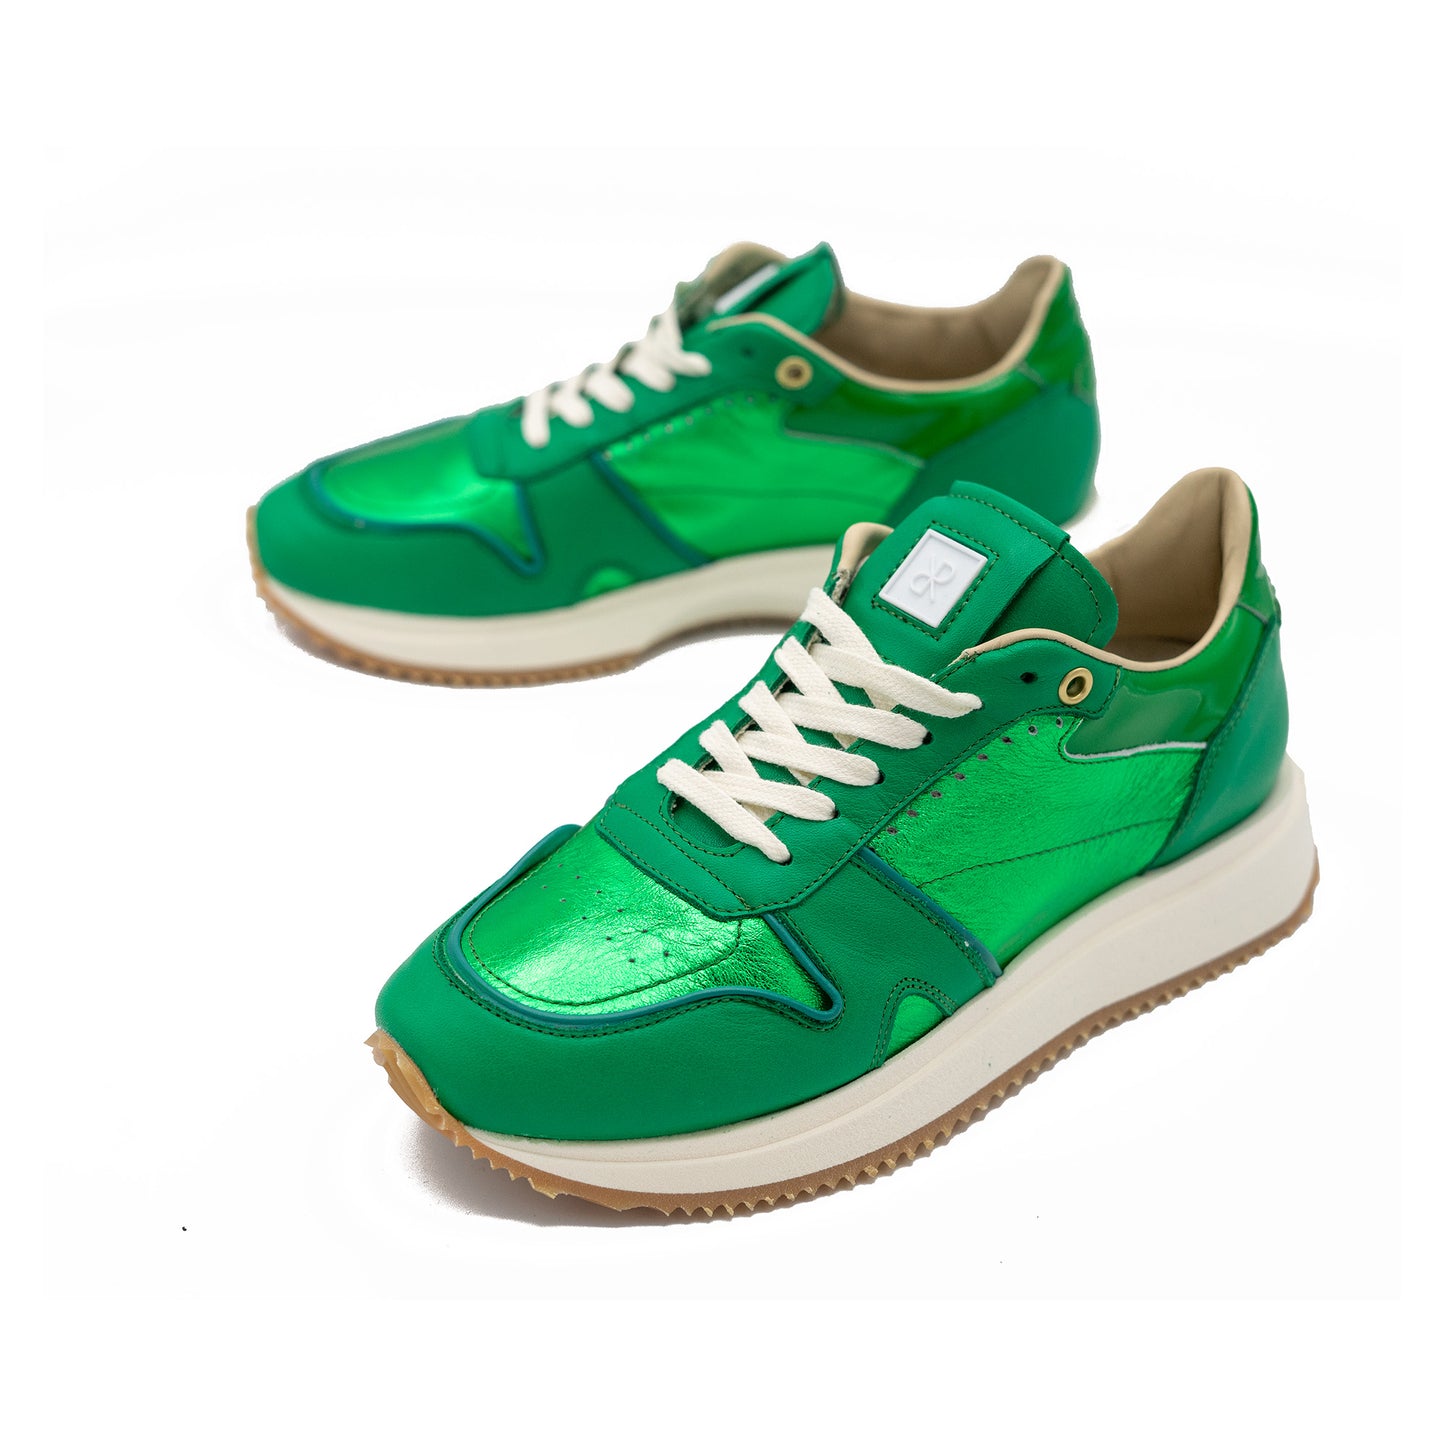 Kim D Leather Sneaker in Green